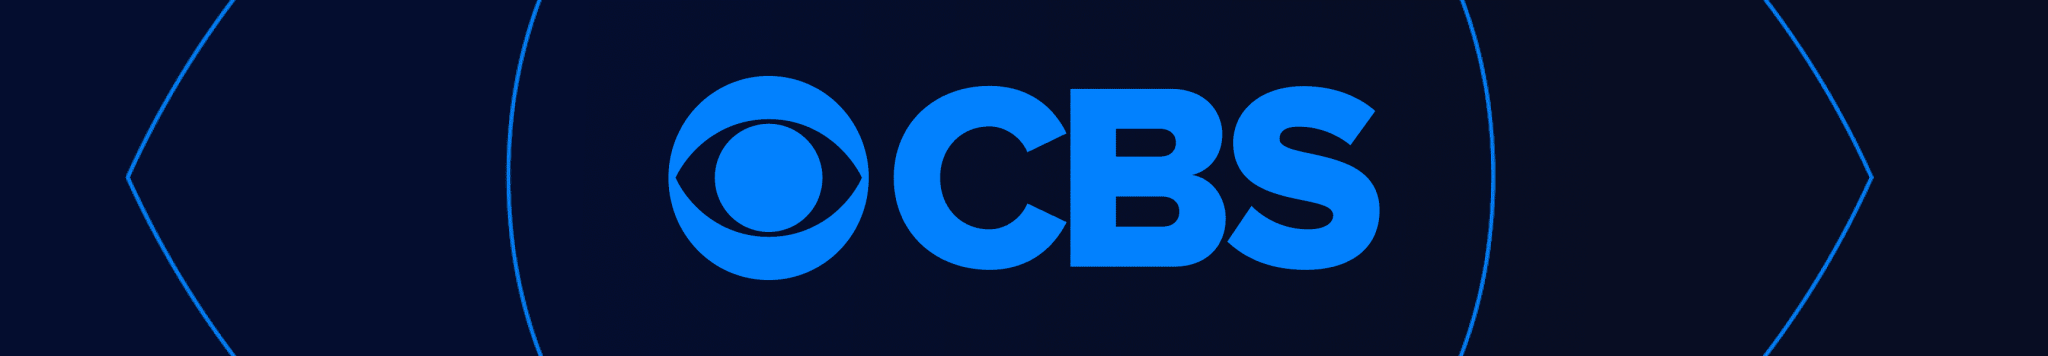 CBS Entertainment Blankets